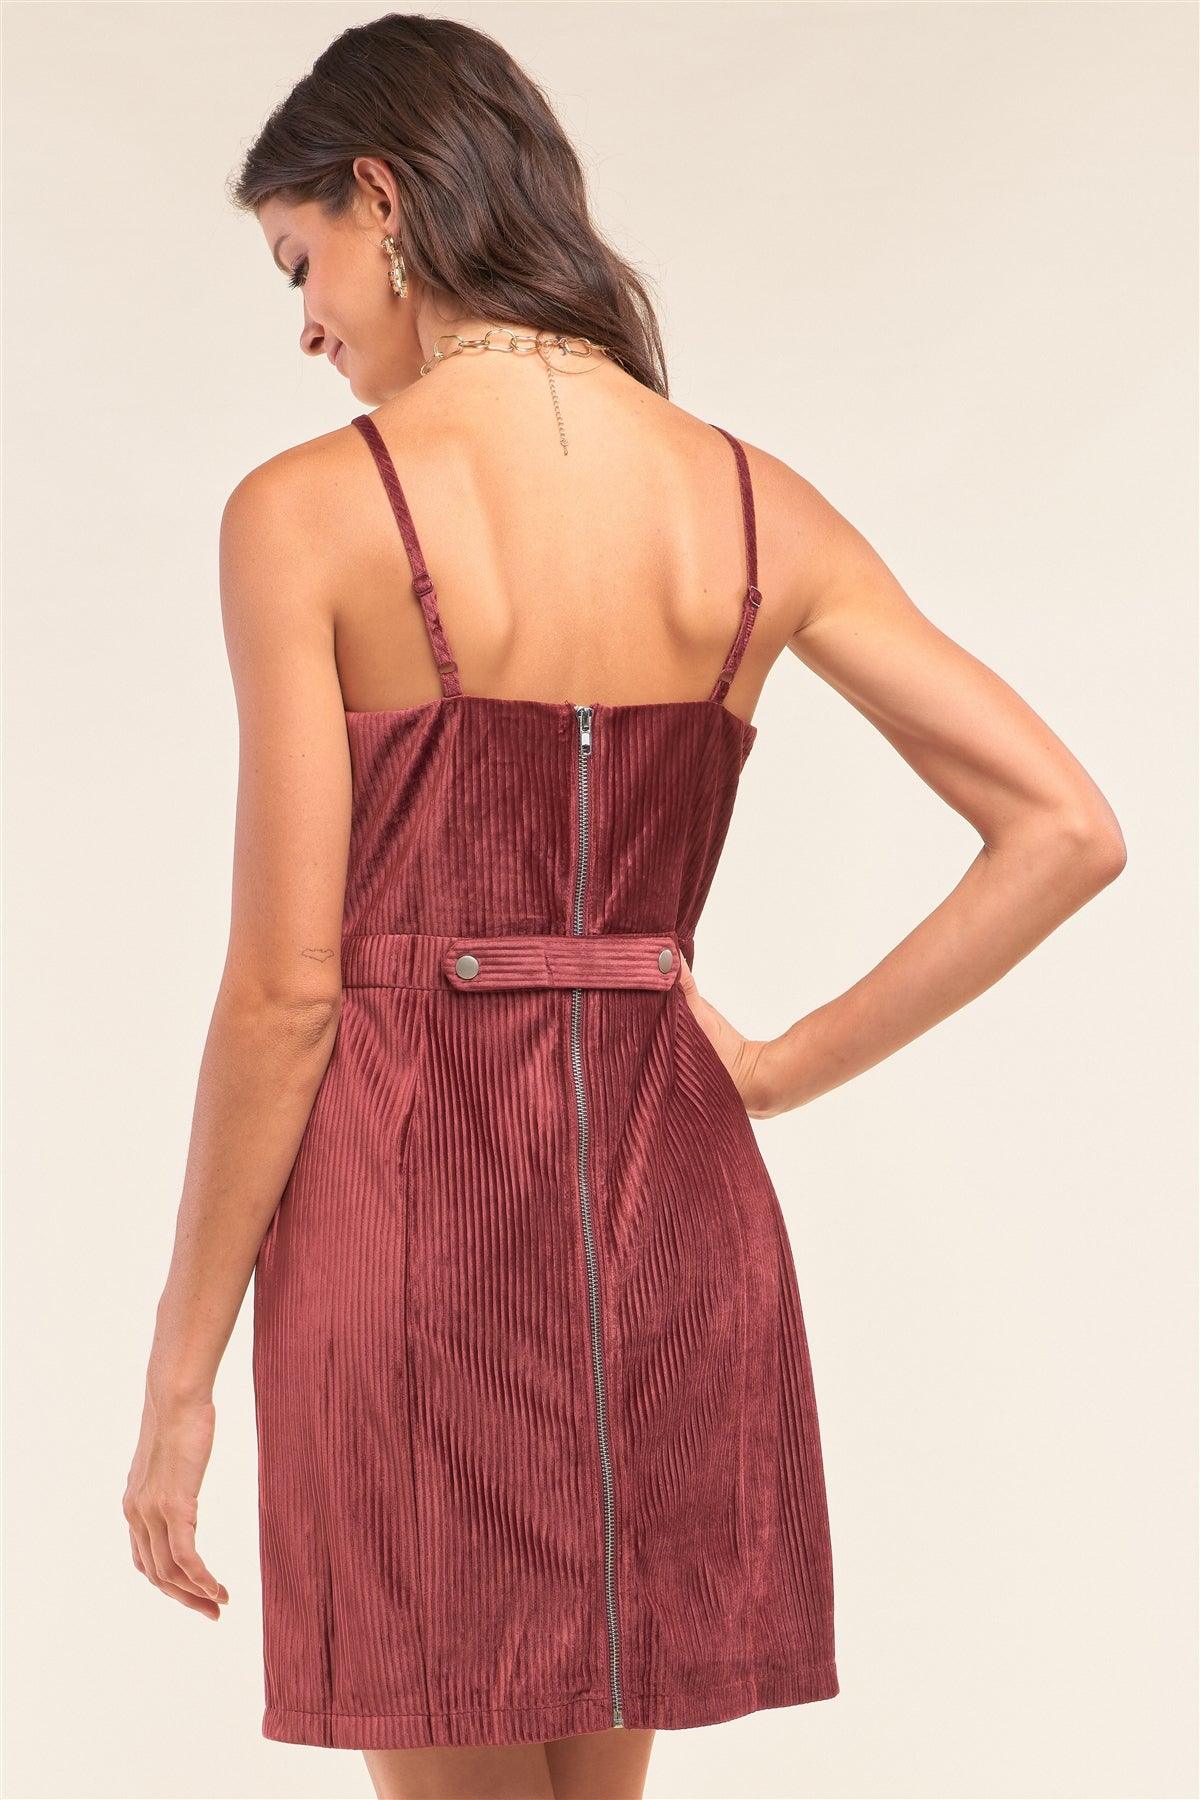 Cranberry Red Corduroy Velvet Sleeveless Square Neck Tight Fit Mini Dress /1-1-2-1